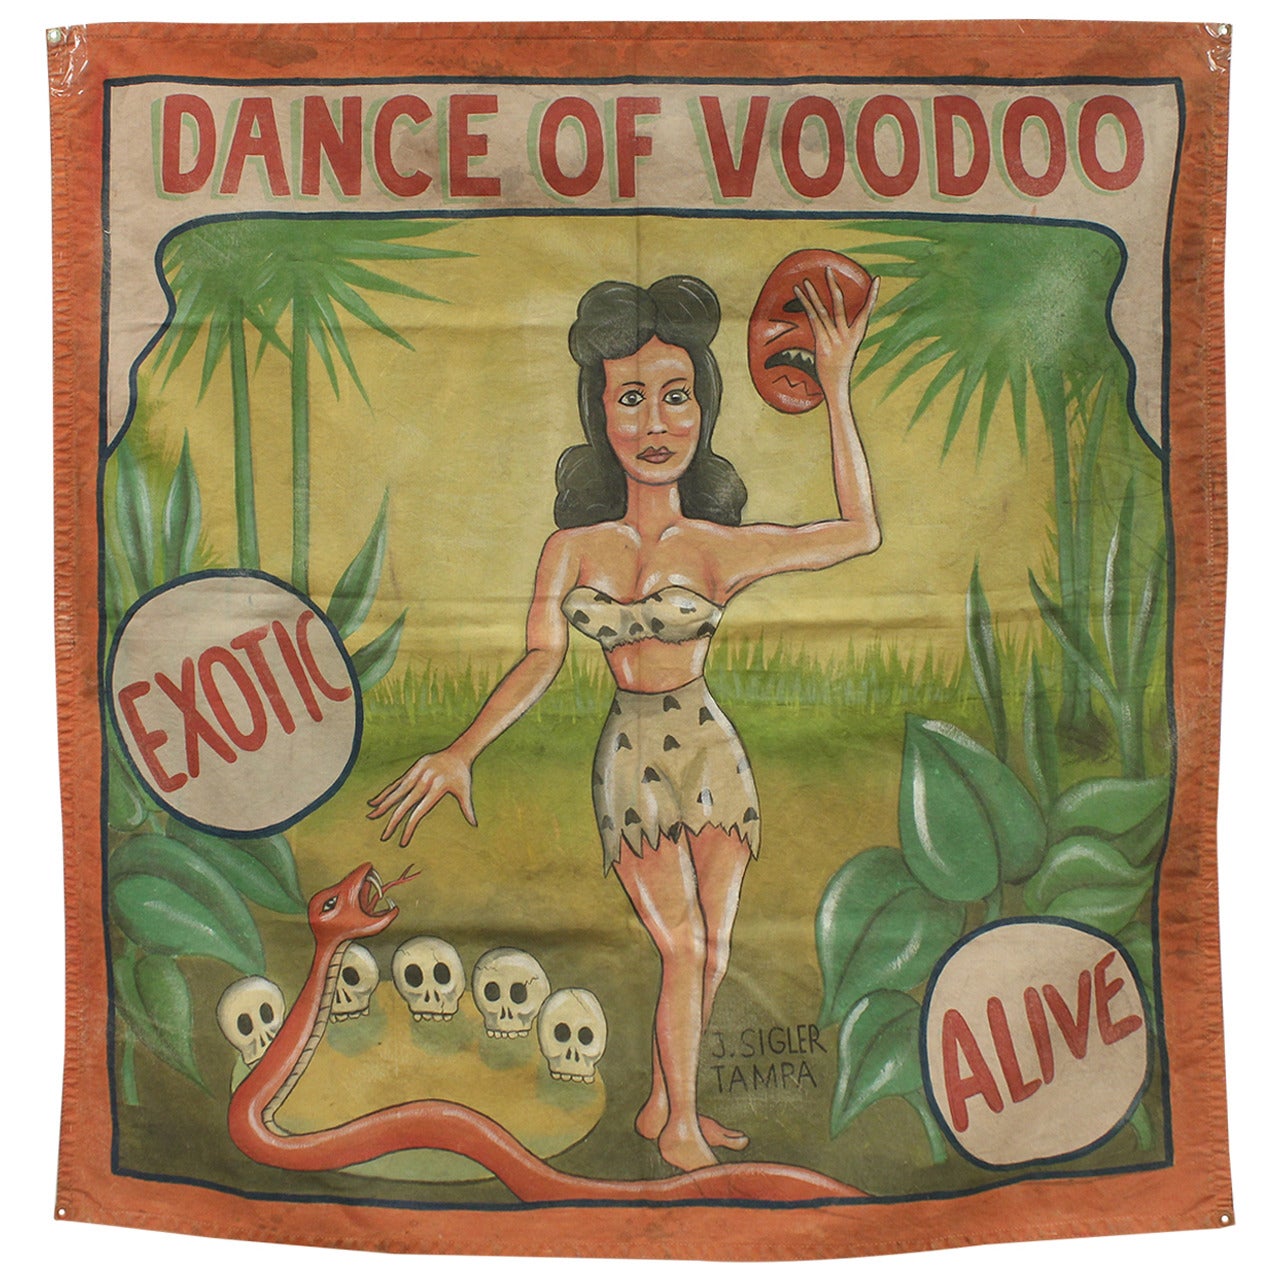 1950s Circus Sideshow Banner, "Dance of Voodoo" by Sigler Studios